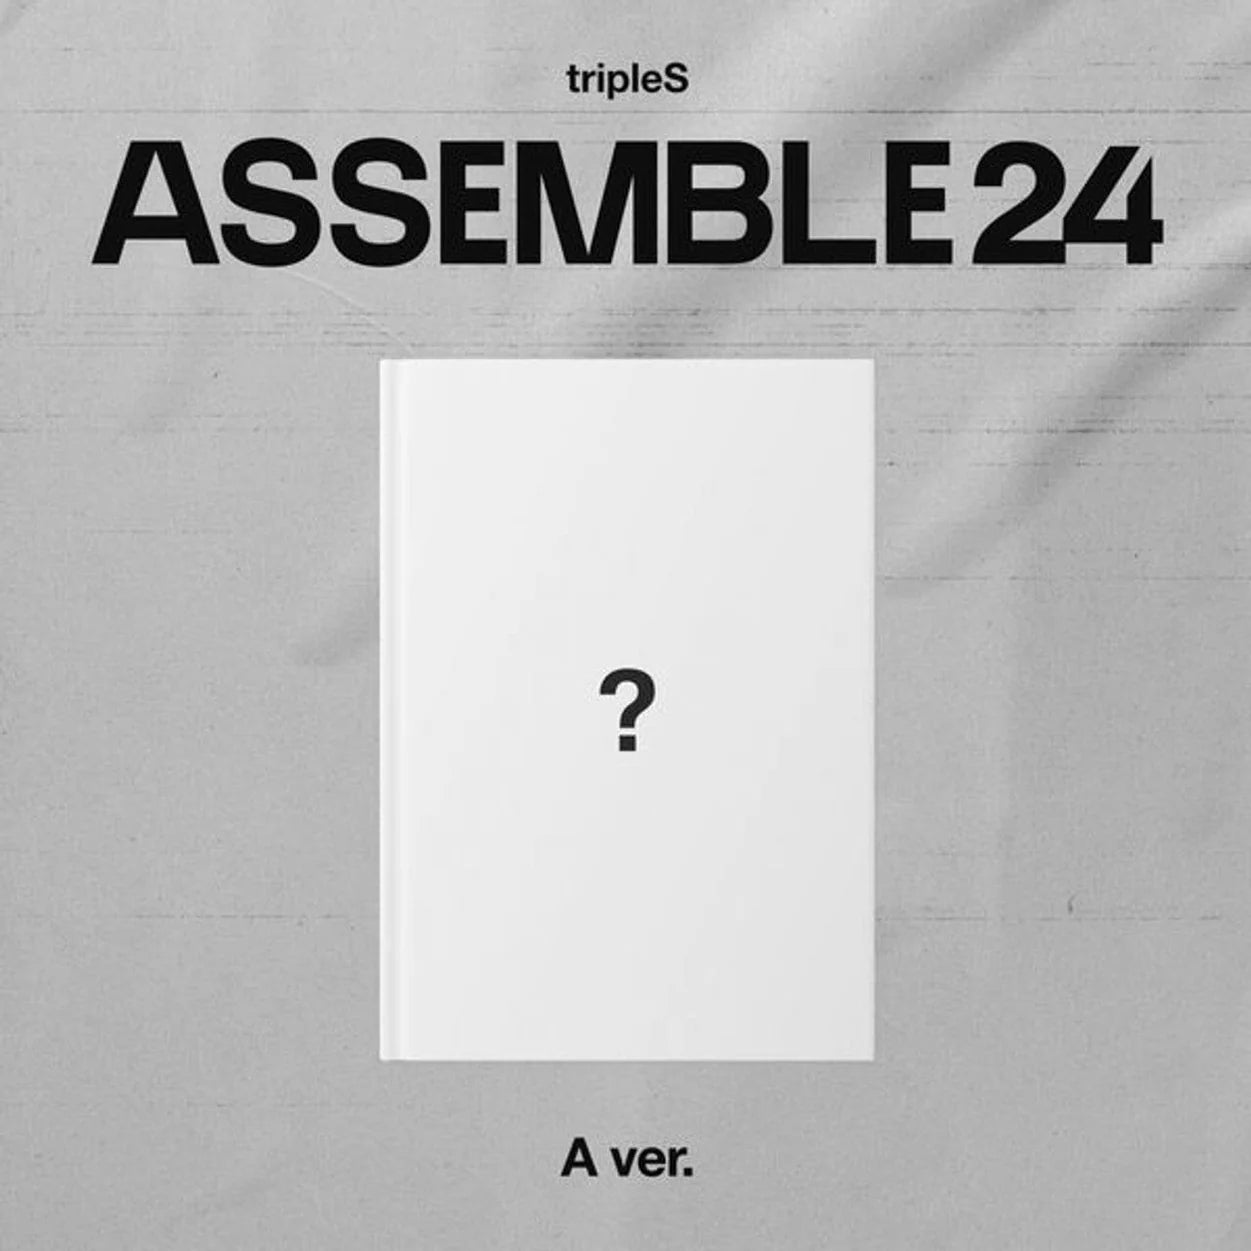 triples-assemble24-1st-full-album-lucky-draw-nolae-125568_1251x1251.webp__PID:3a8837de-31dc-4f09-8dd1-8f2dce72ad00